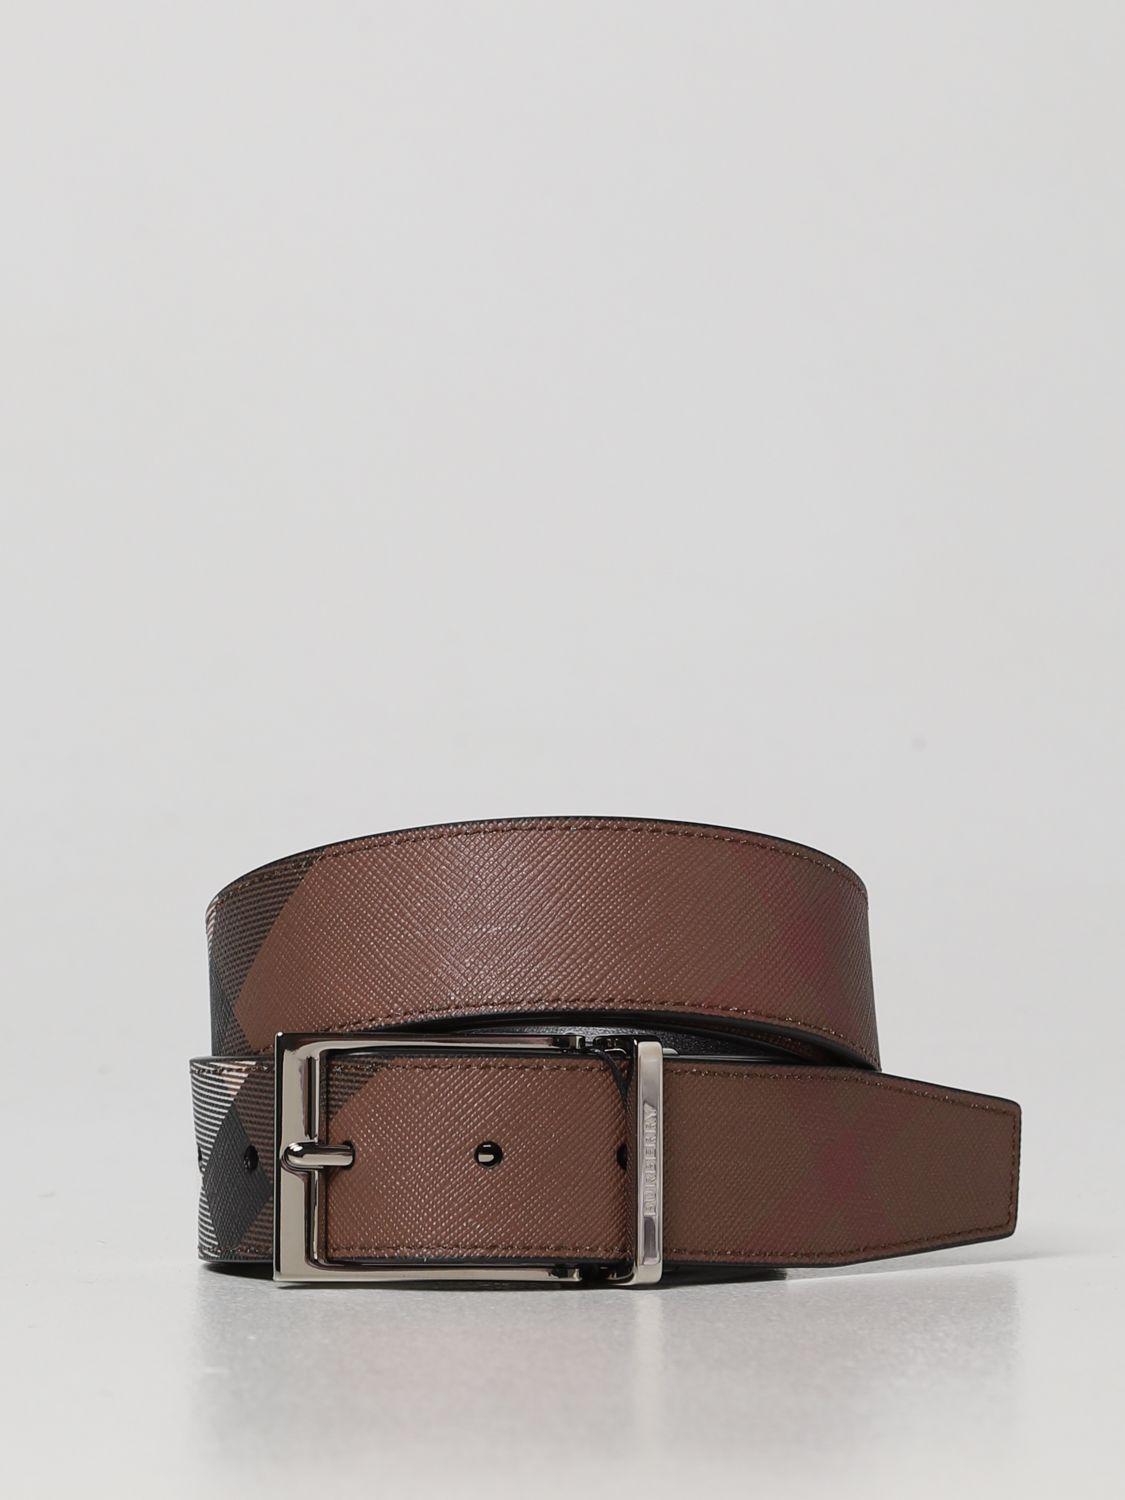 Burberry Men's Reversible Leather Belt